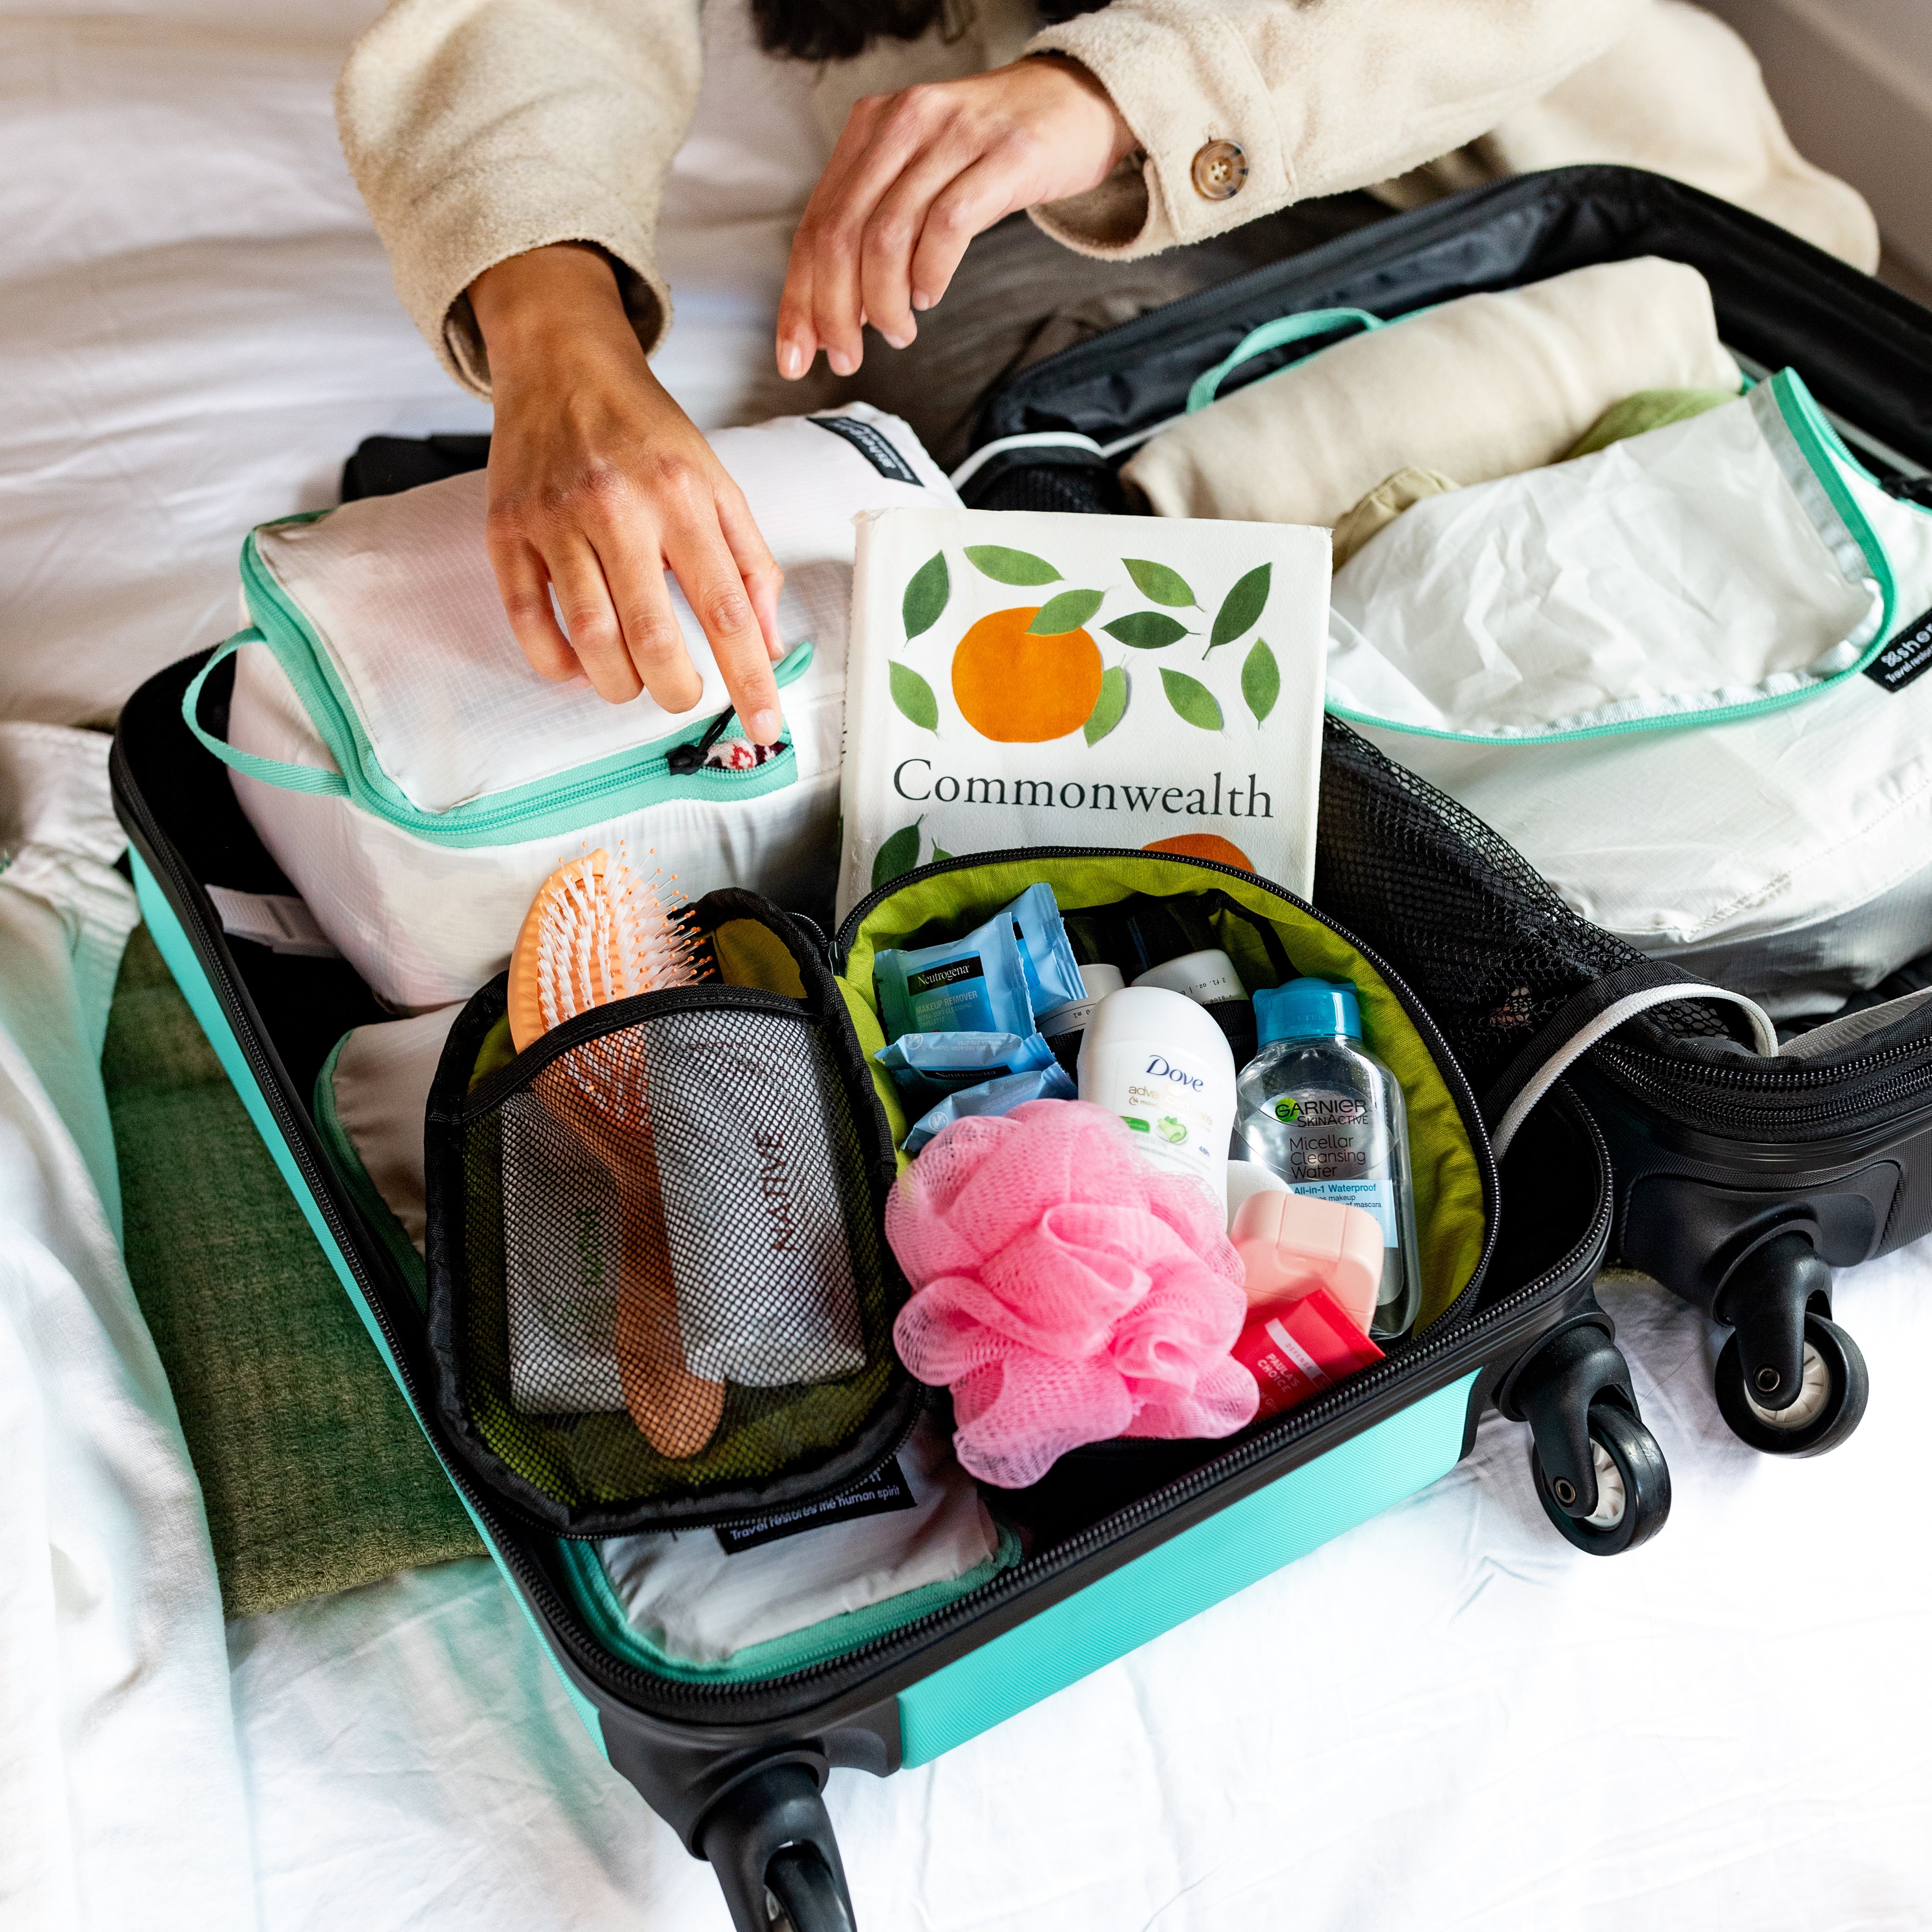 Asom Travel Toiletries Women Convenience Kit, Personal Care